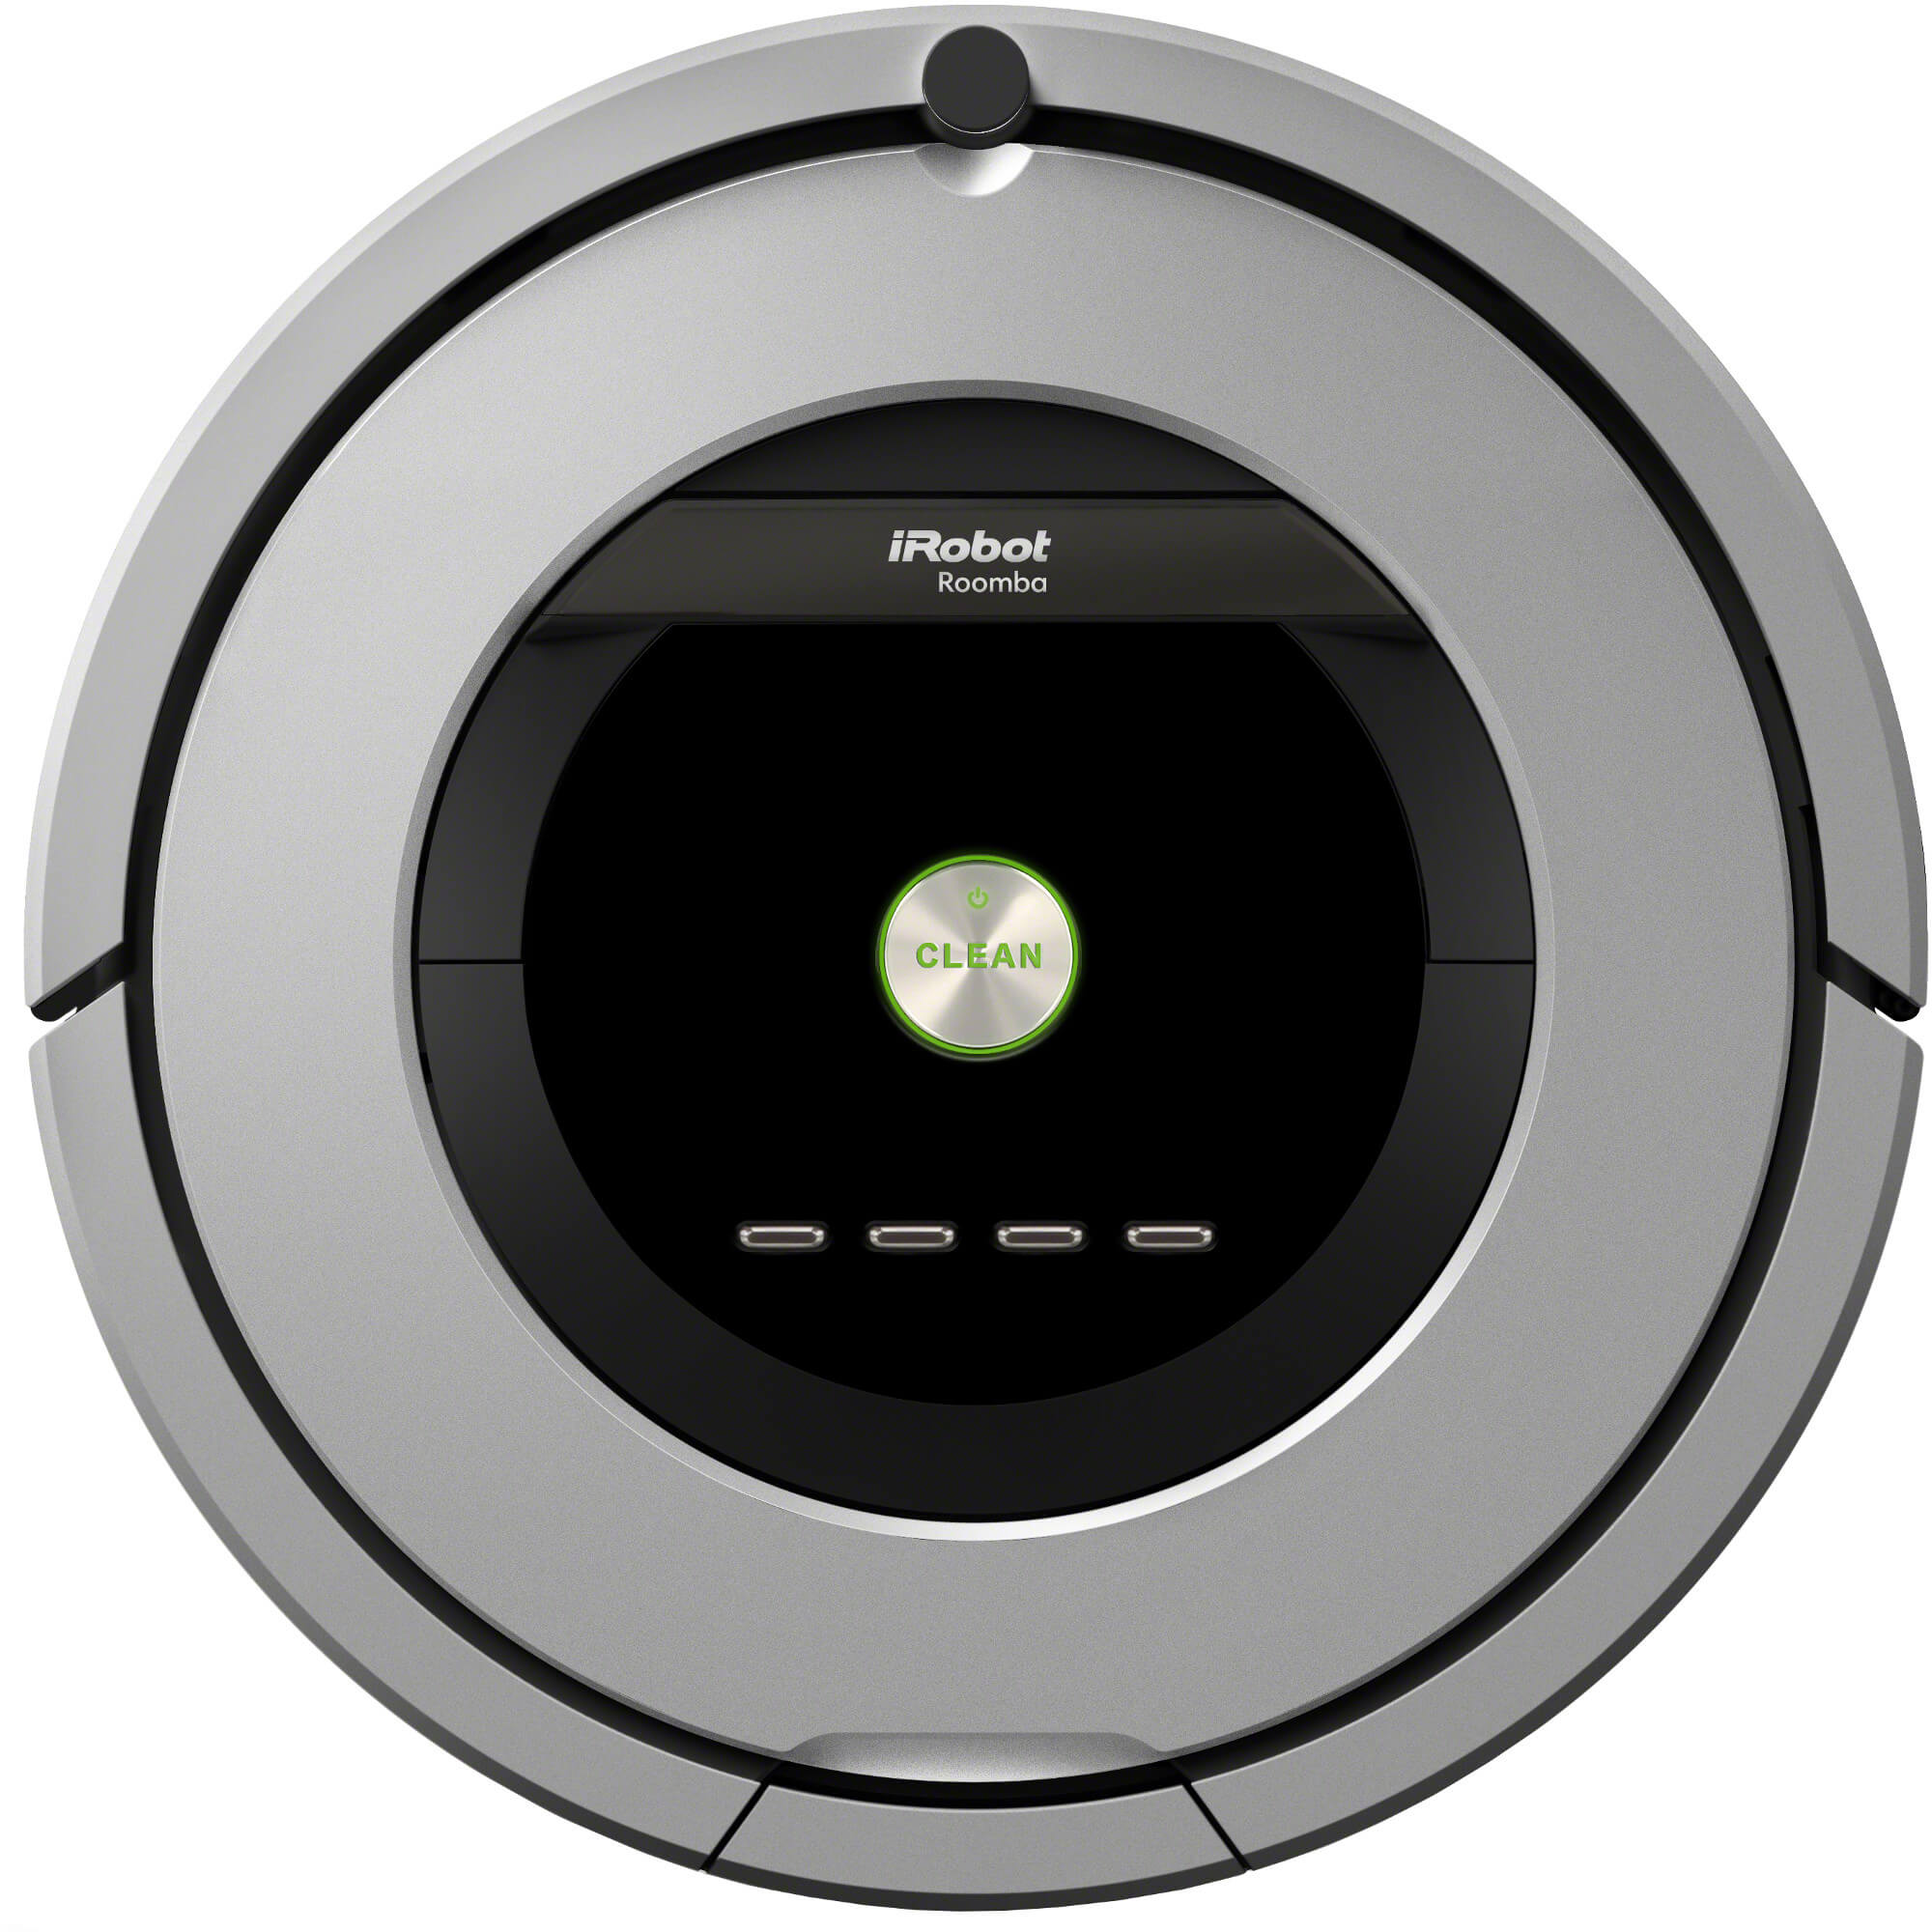  Robot de aspirare iRobot Roomba 886, 33 W 